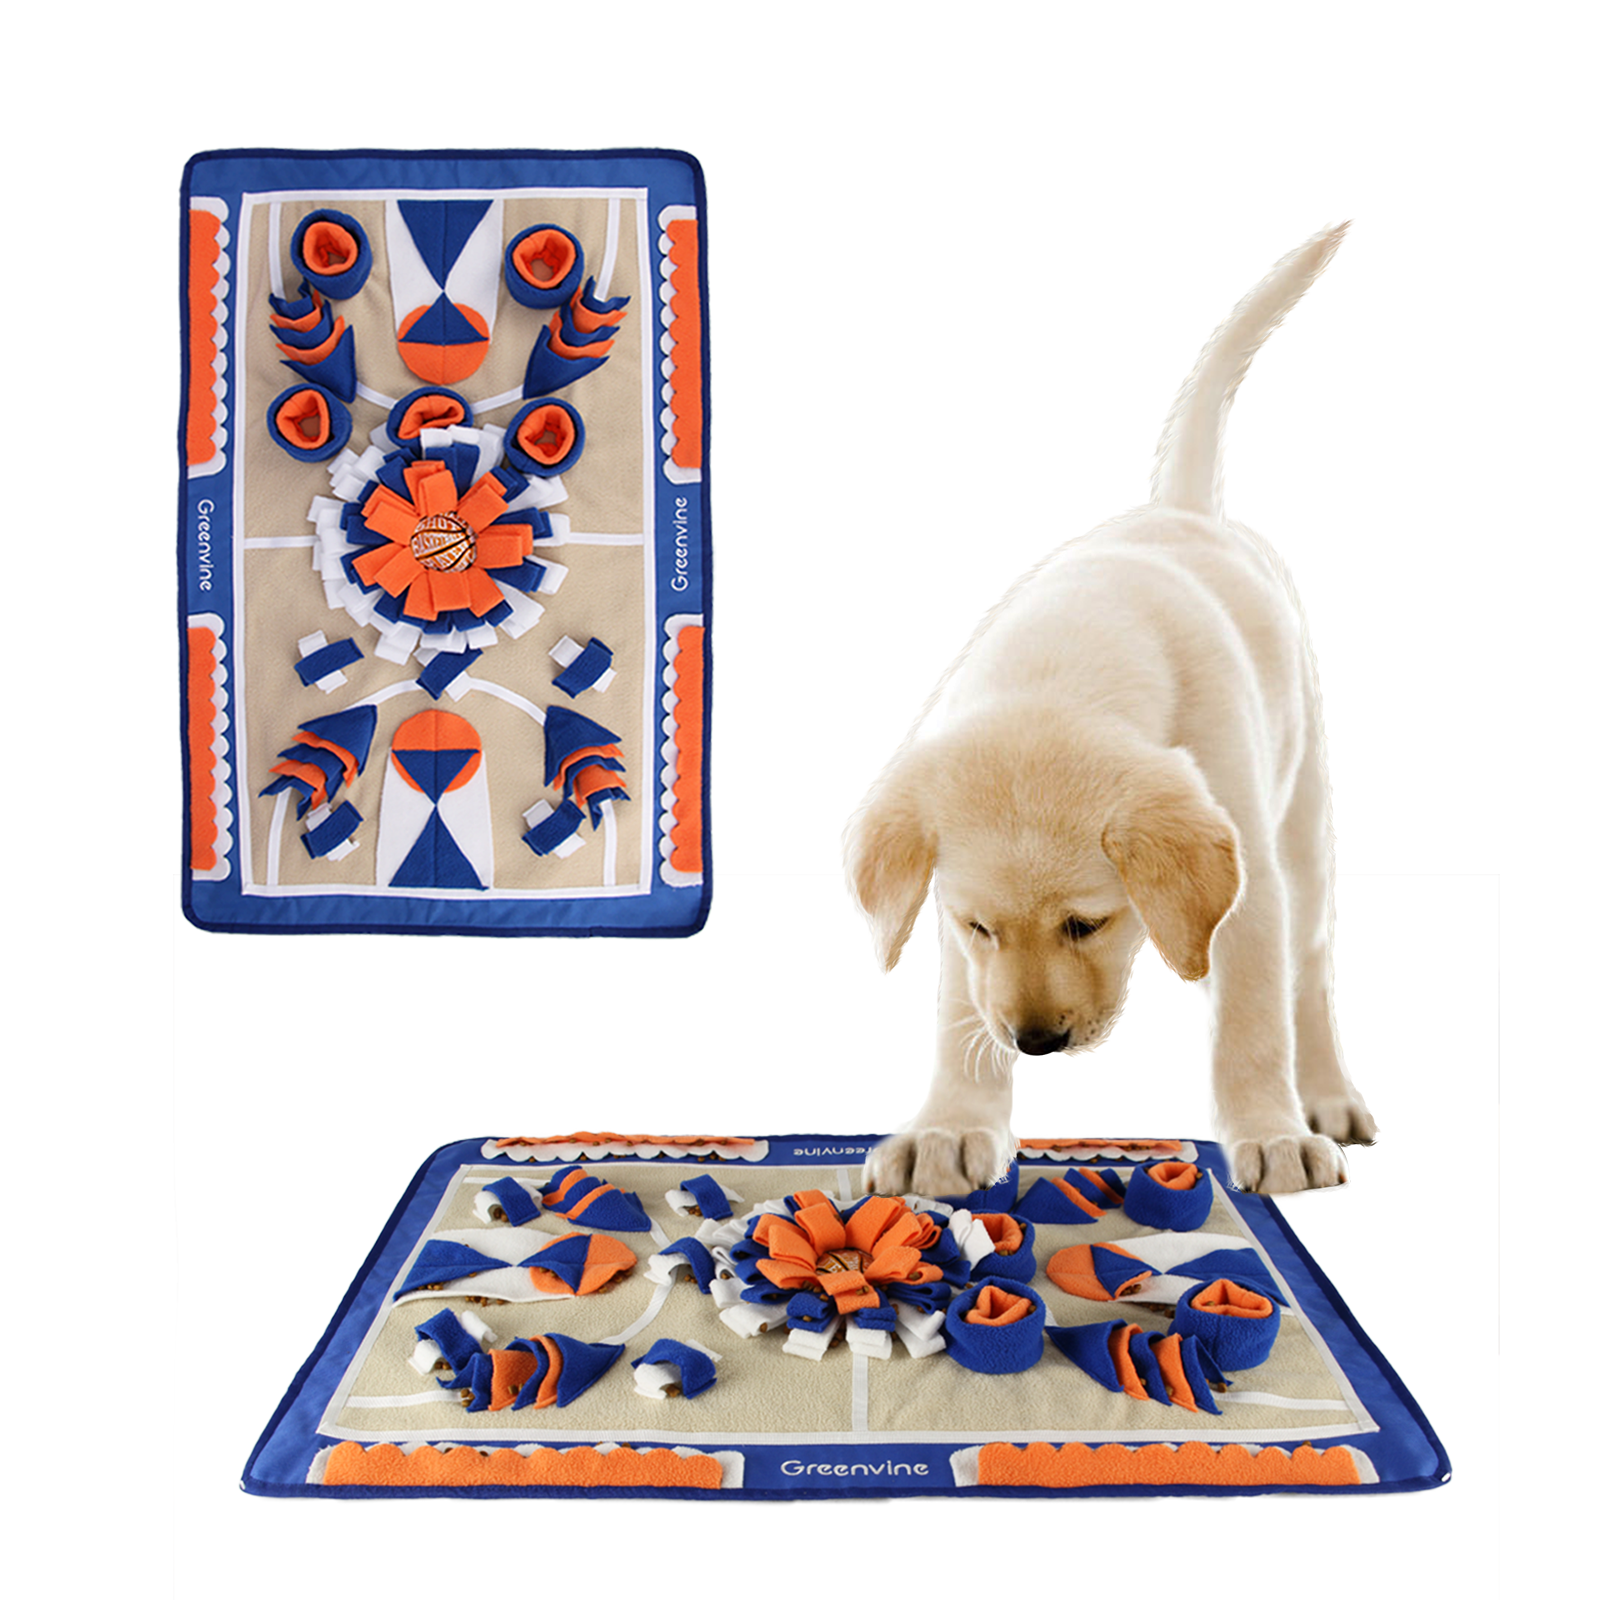 Fovien Dog Mat, Interactive Dog Toys Feed Game Brain Stimulating